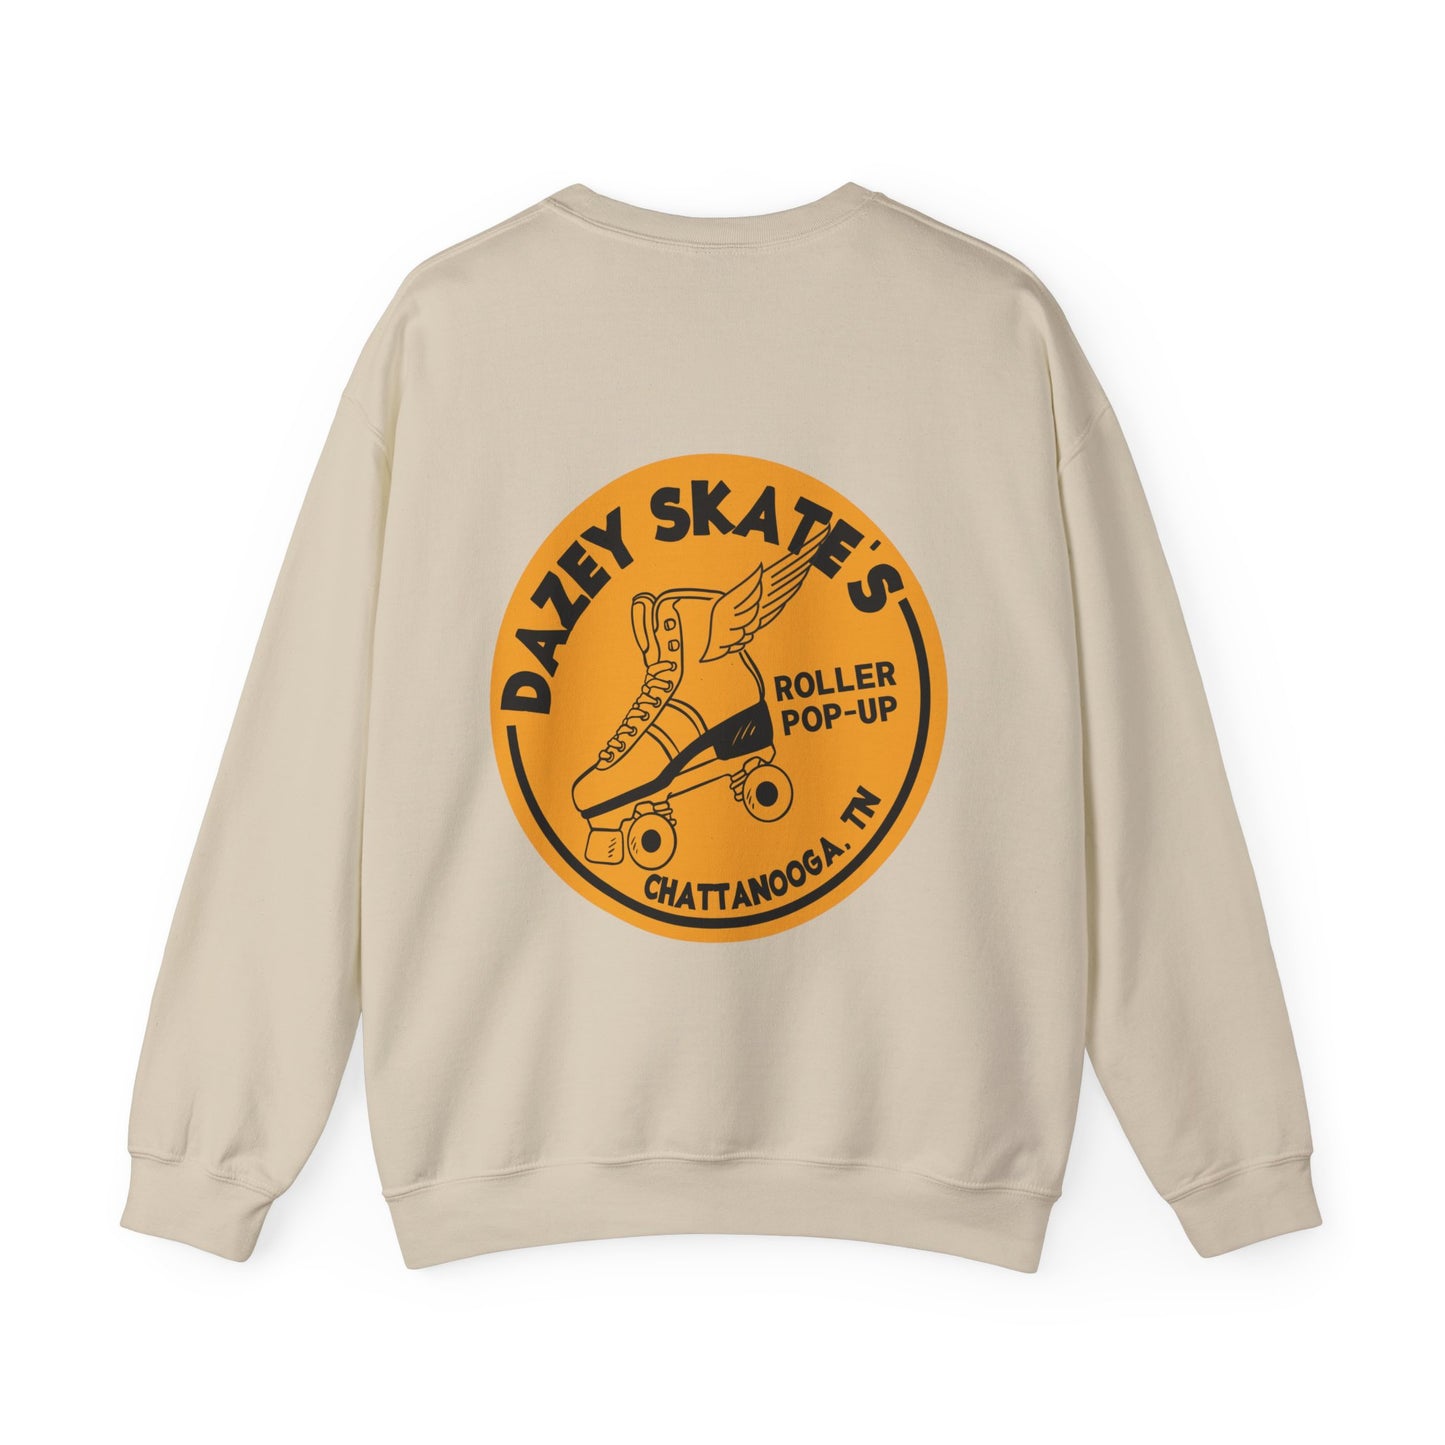 Dazey Skate's Roller Pop Up Sweatshirt